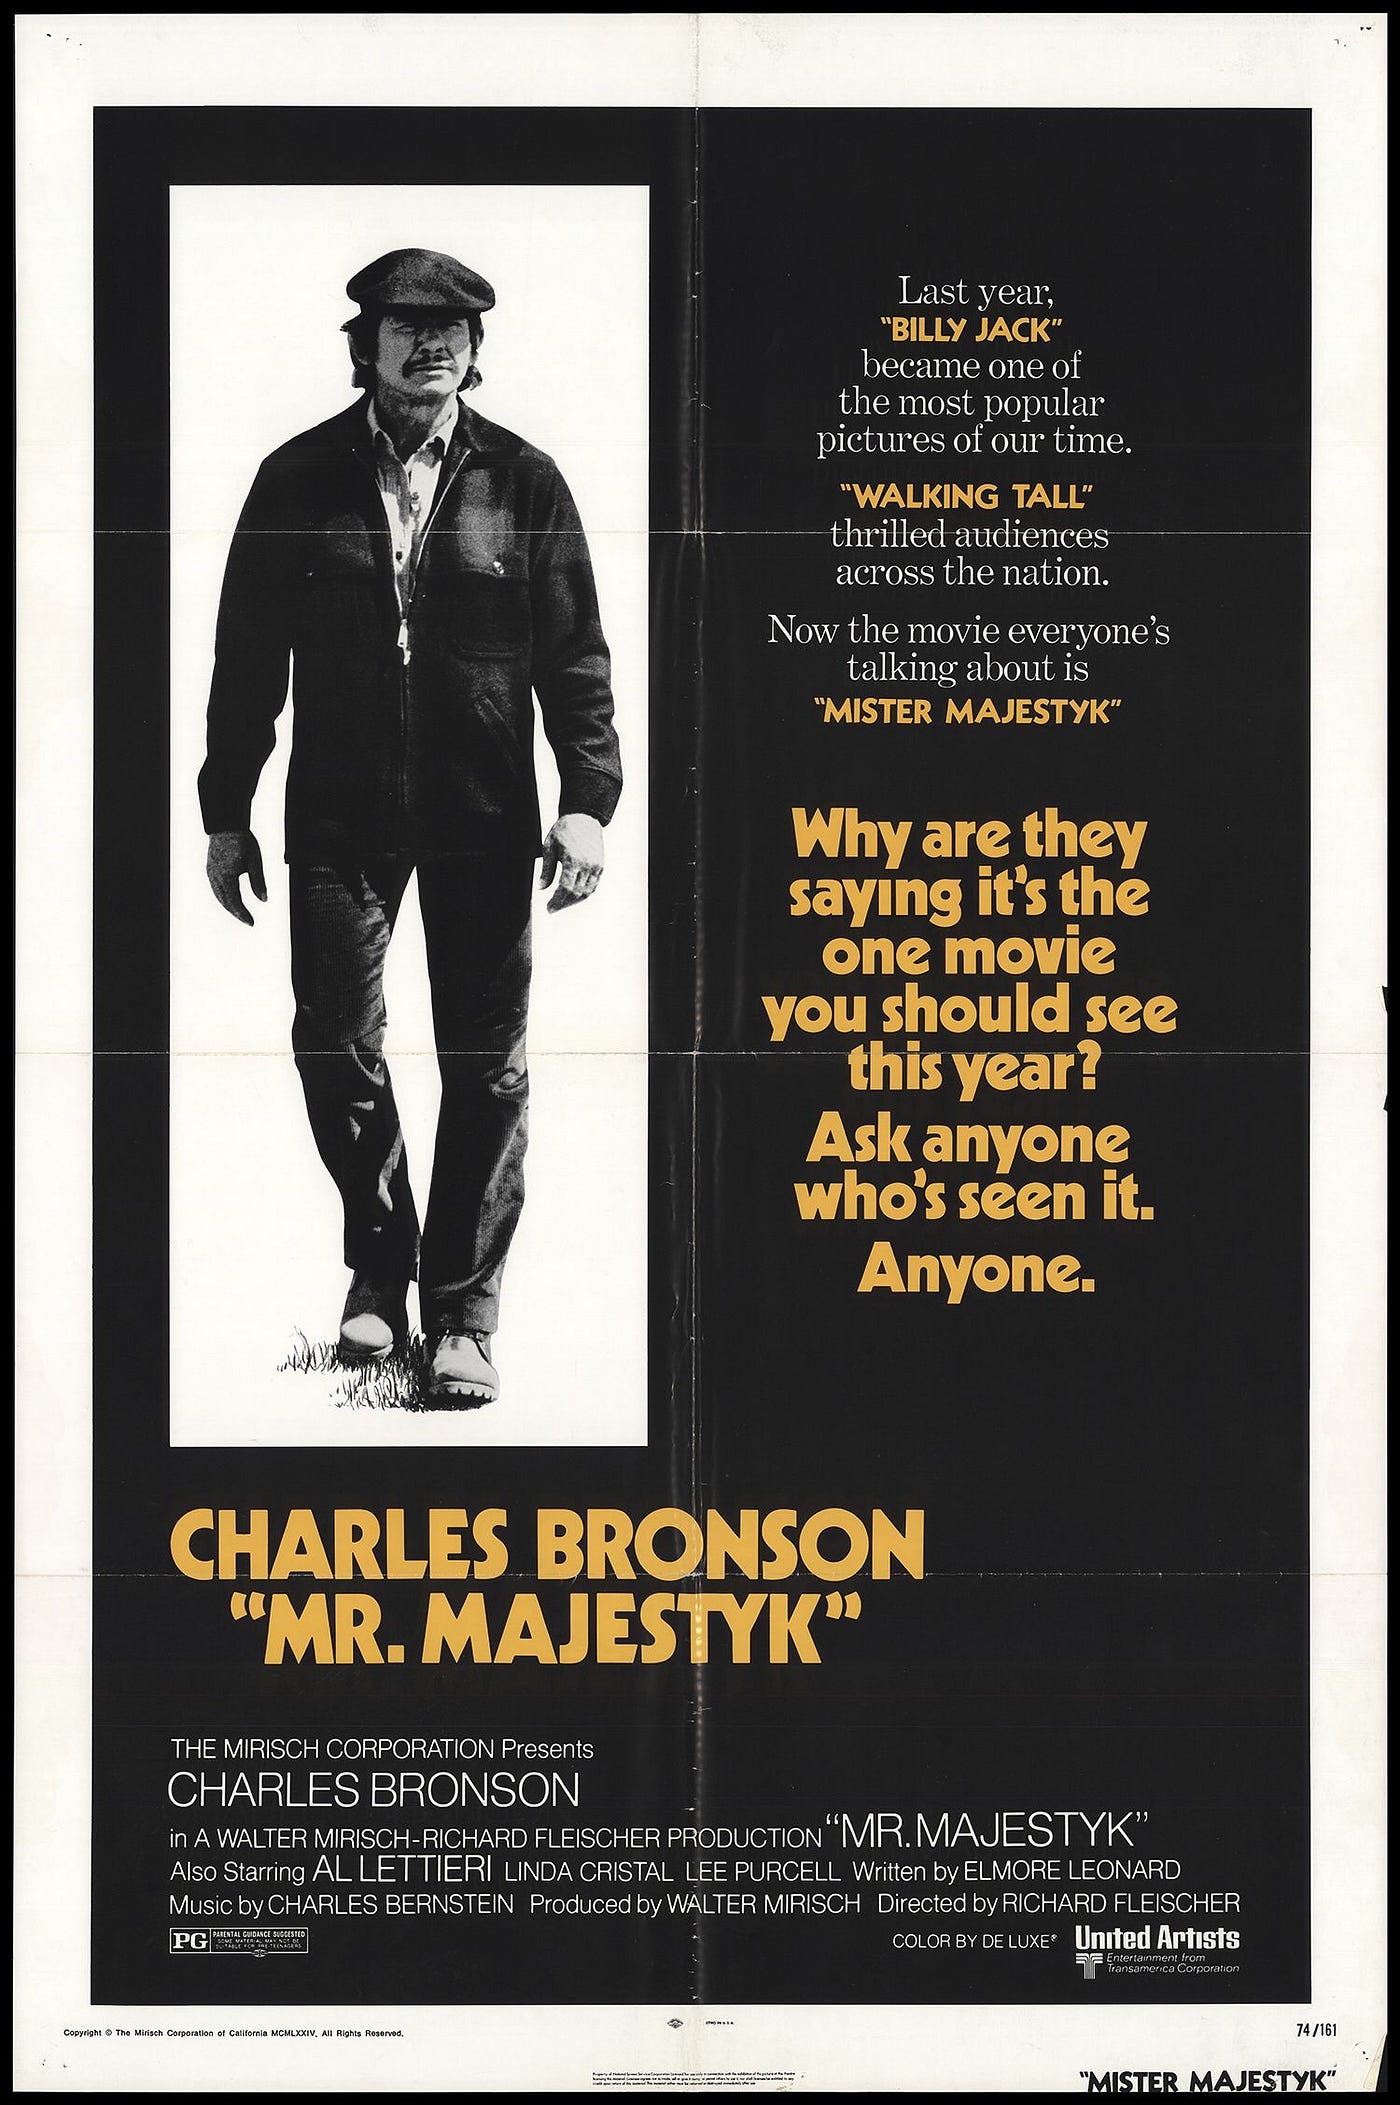 April 10, 2020-Mr. Majestyk (1974), based upon Mr. Majestyk (1974) | by  Sean P. Mulhall | Medium